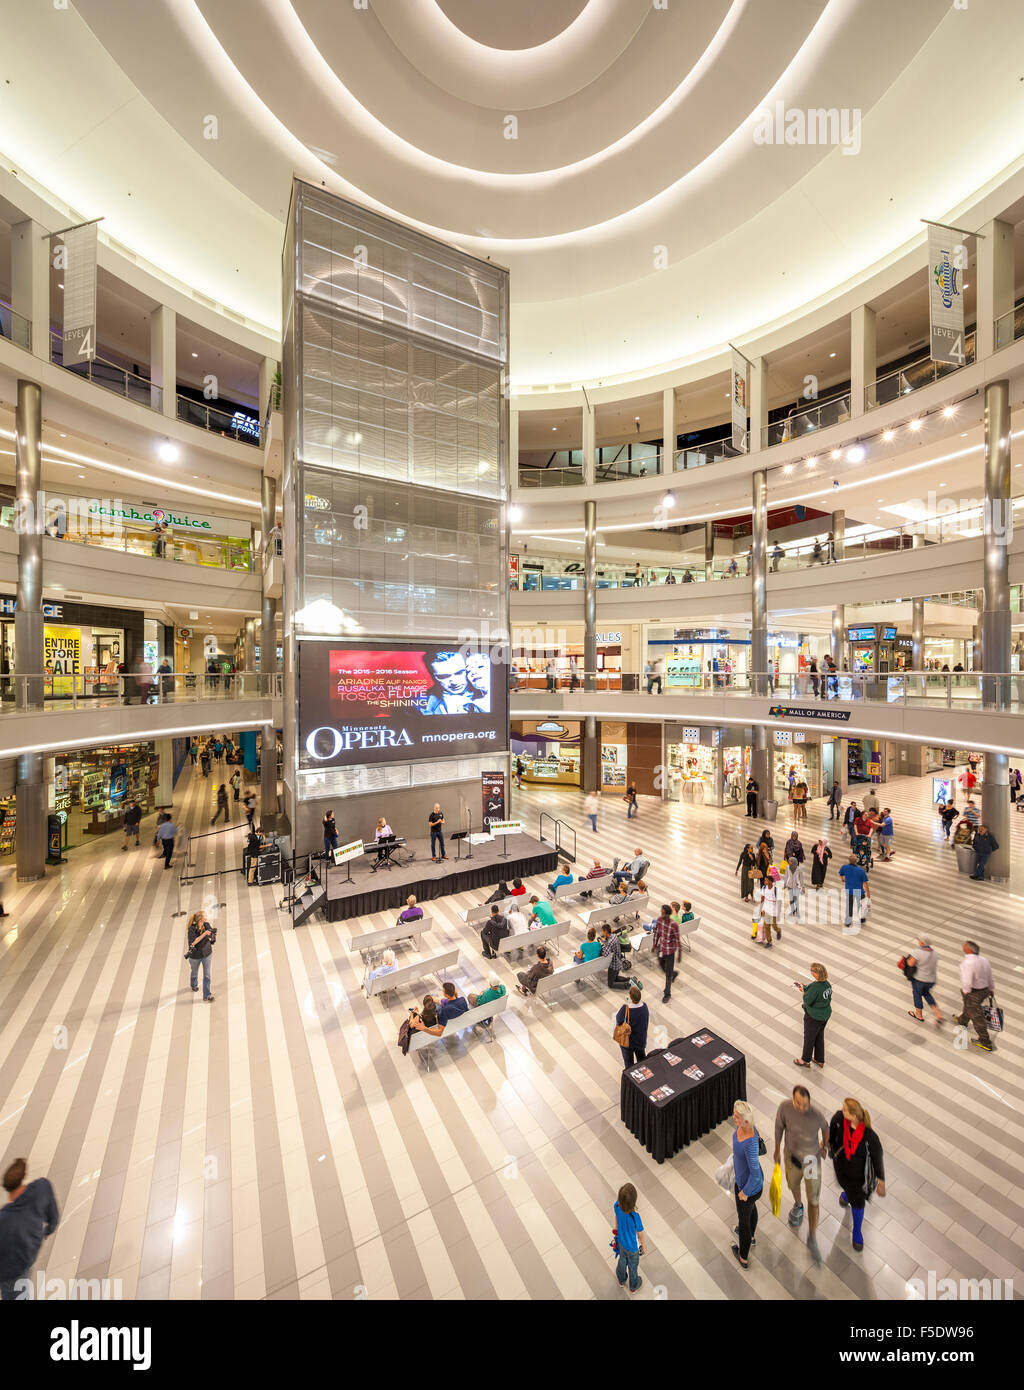 Minnesota Opera presentation inside Minneapolis Mall of America. Largest shopping mall in the US. Interior. Stock Photo